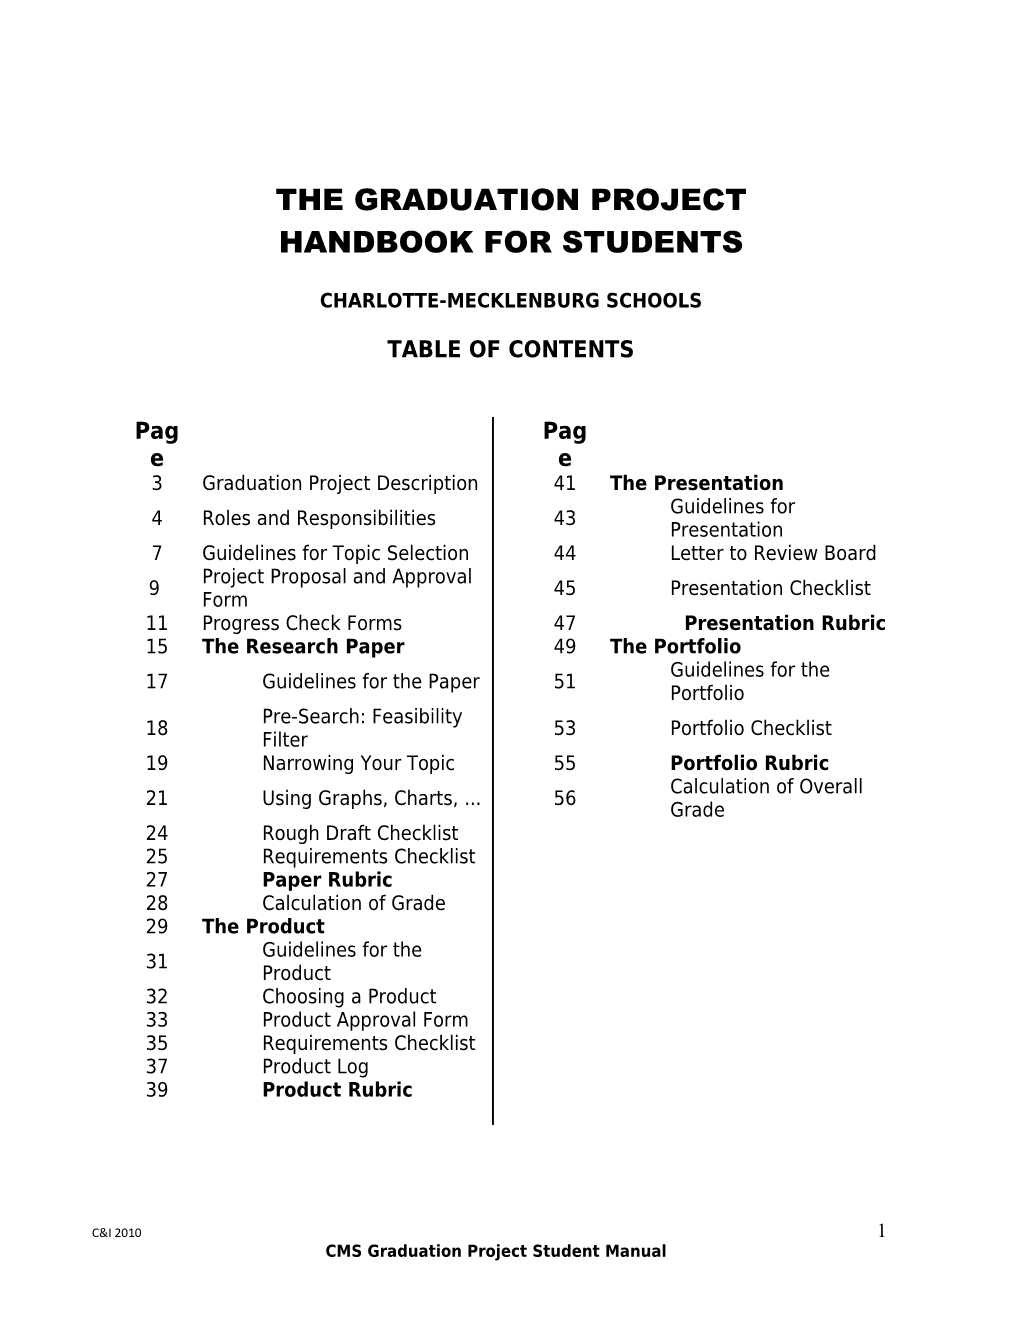 The Graduation Project